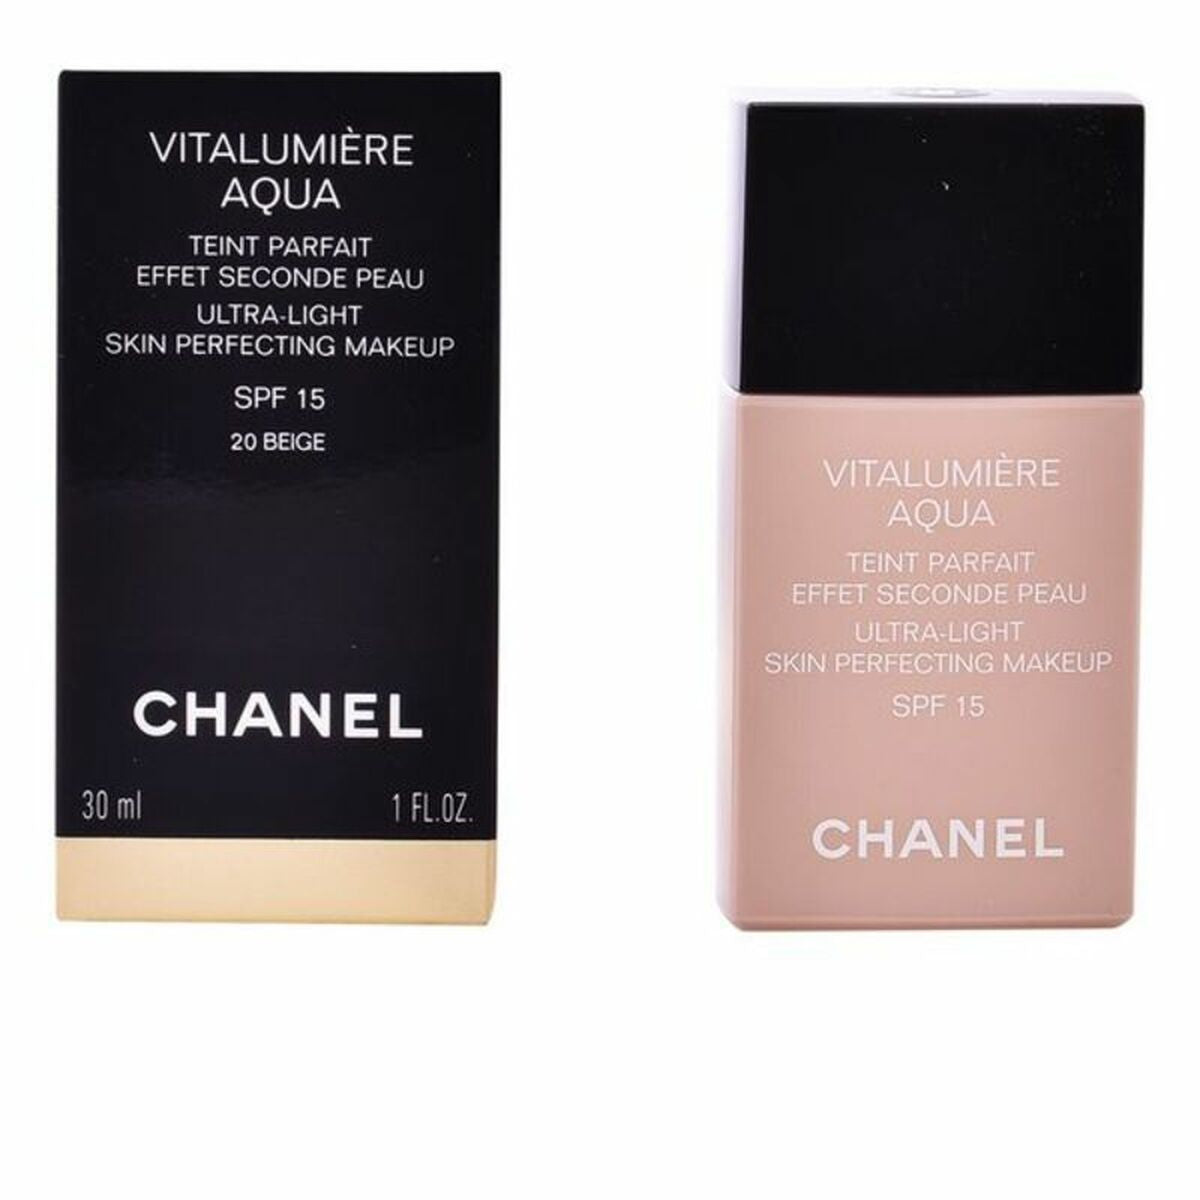 Kaufe Fluid Makeup Basis Vitalumière Aqua Chanel bei AWK Flagship um € 61.00